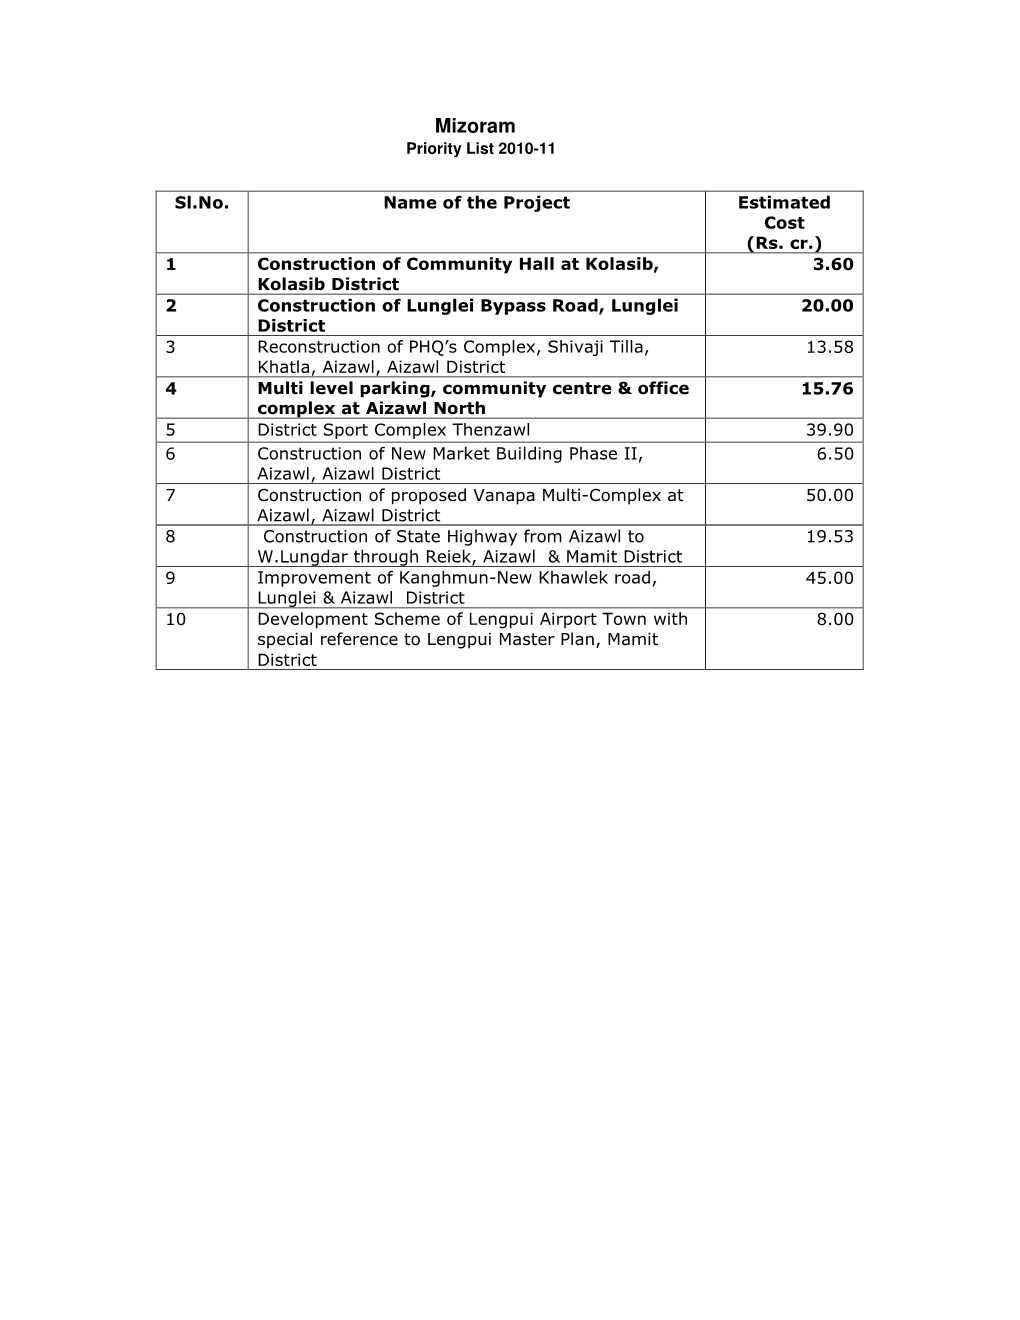 Mizoram Priority List 2010-11